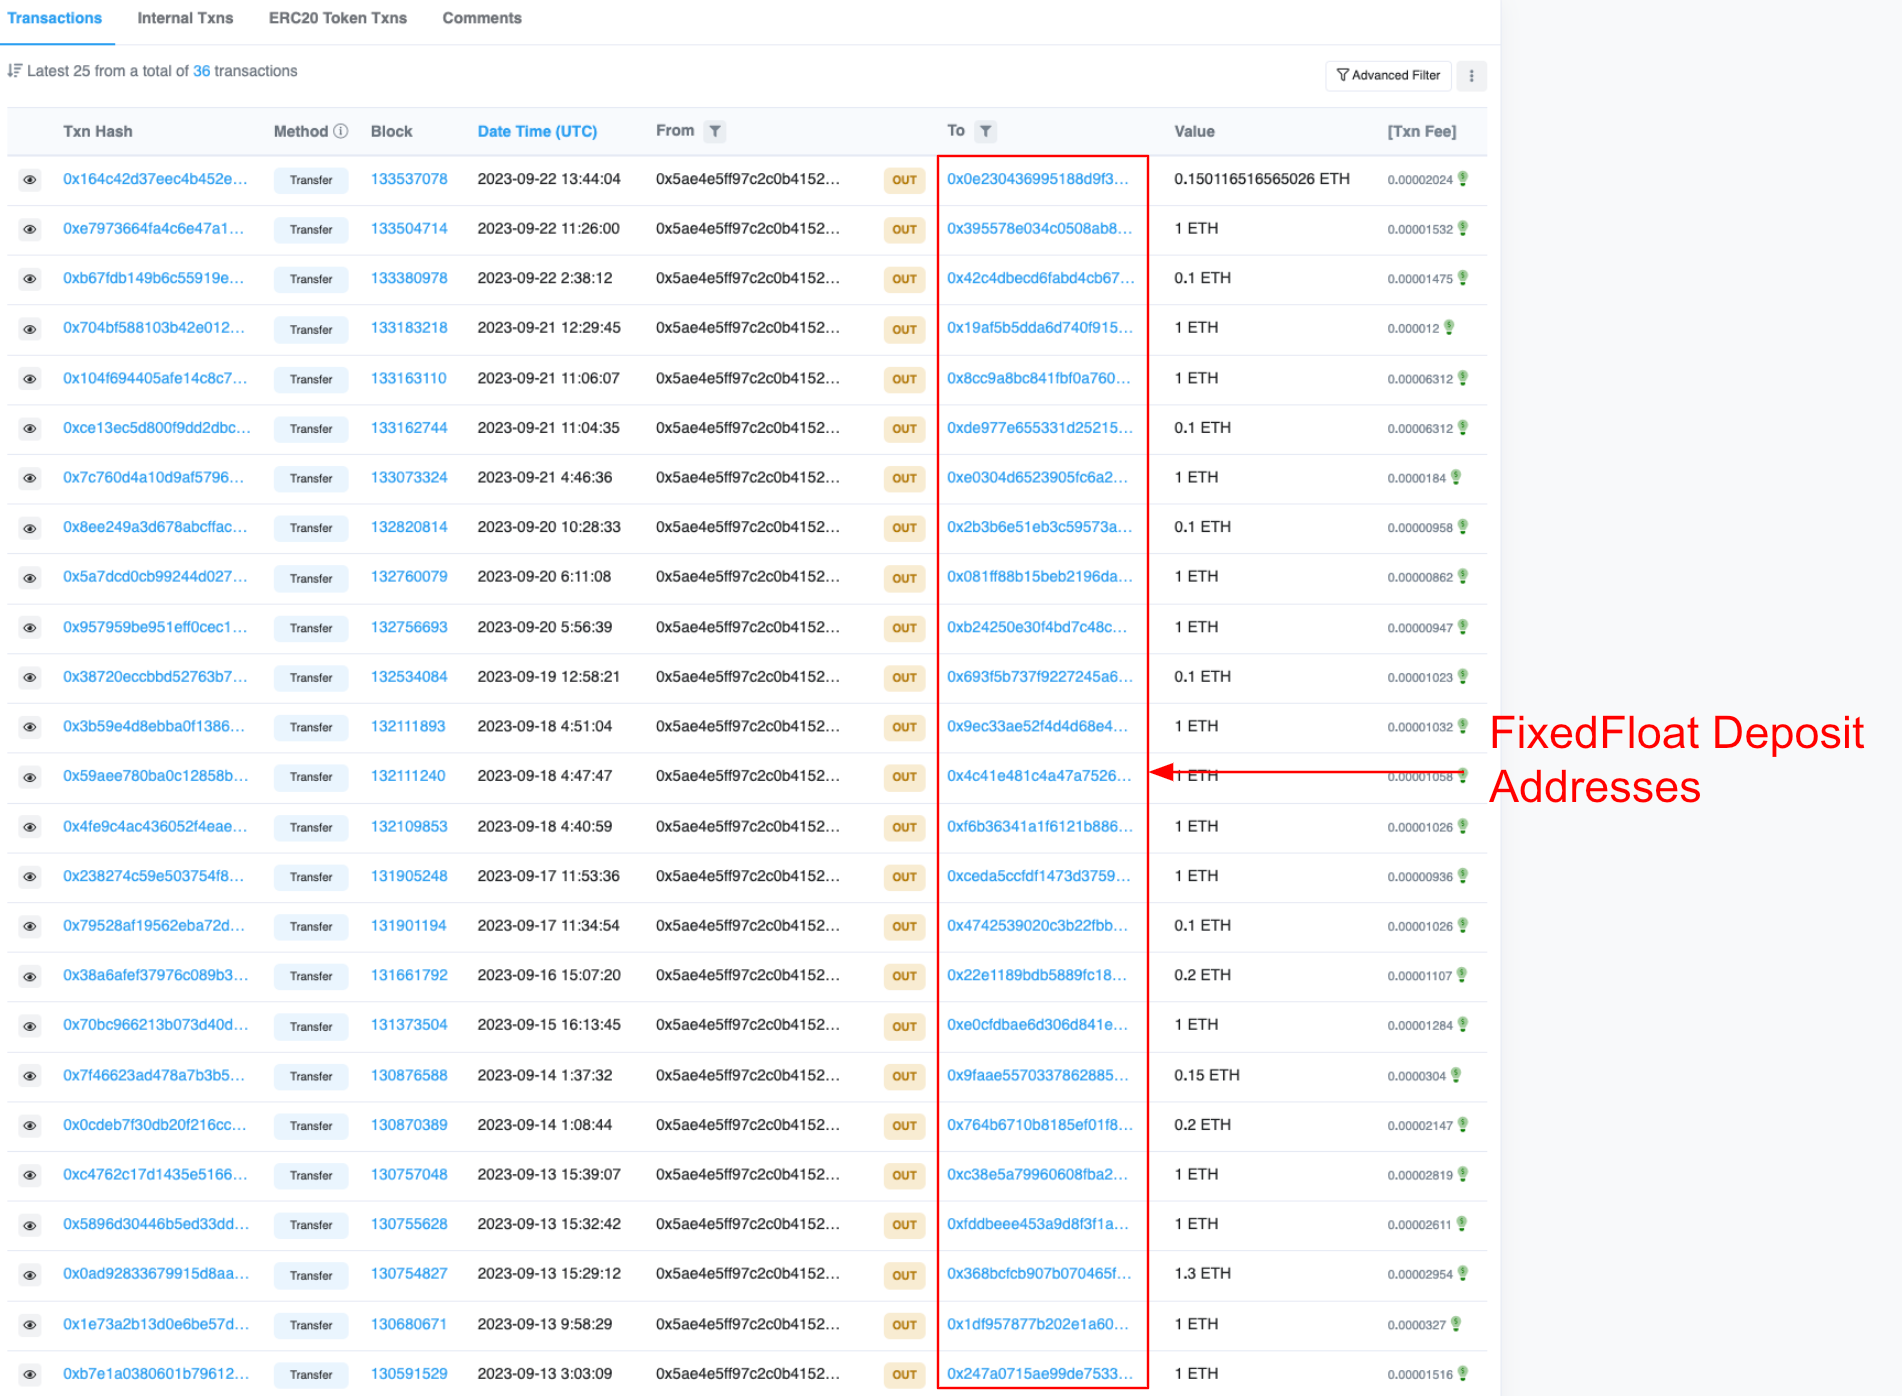 Blockchain Transaction Log Highlighting FixedFloat Deposits